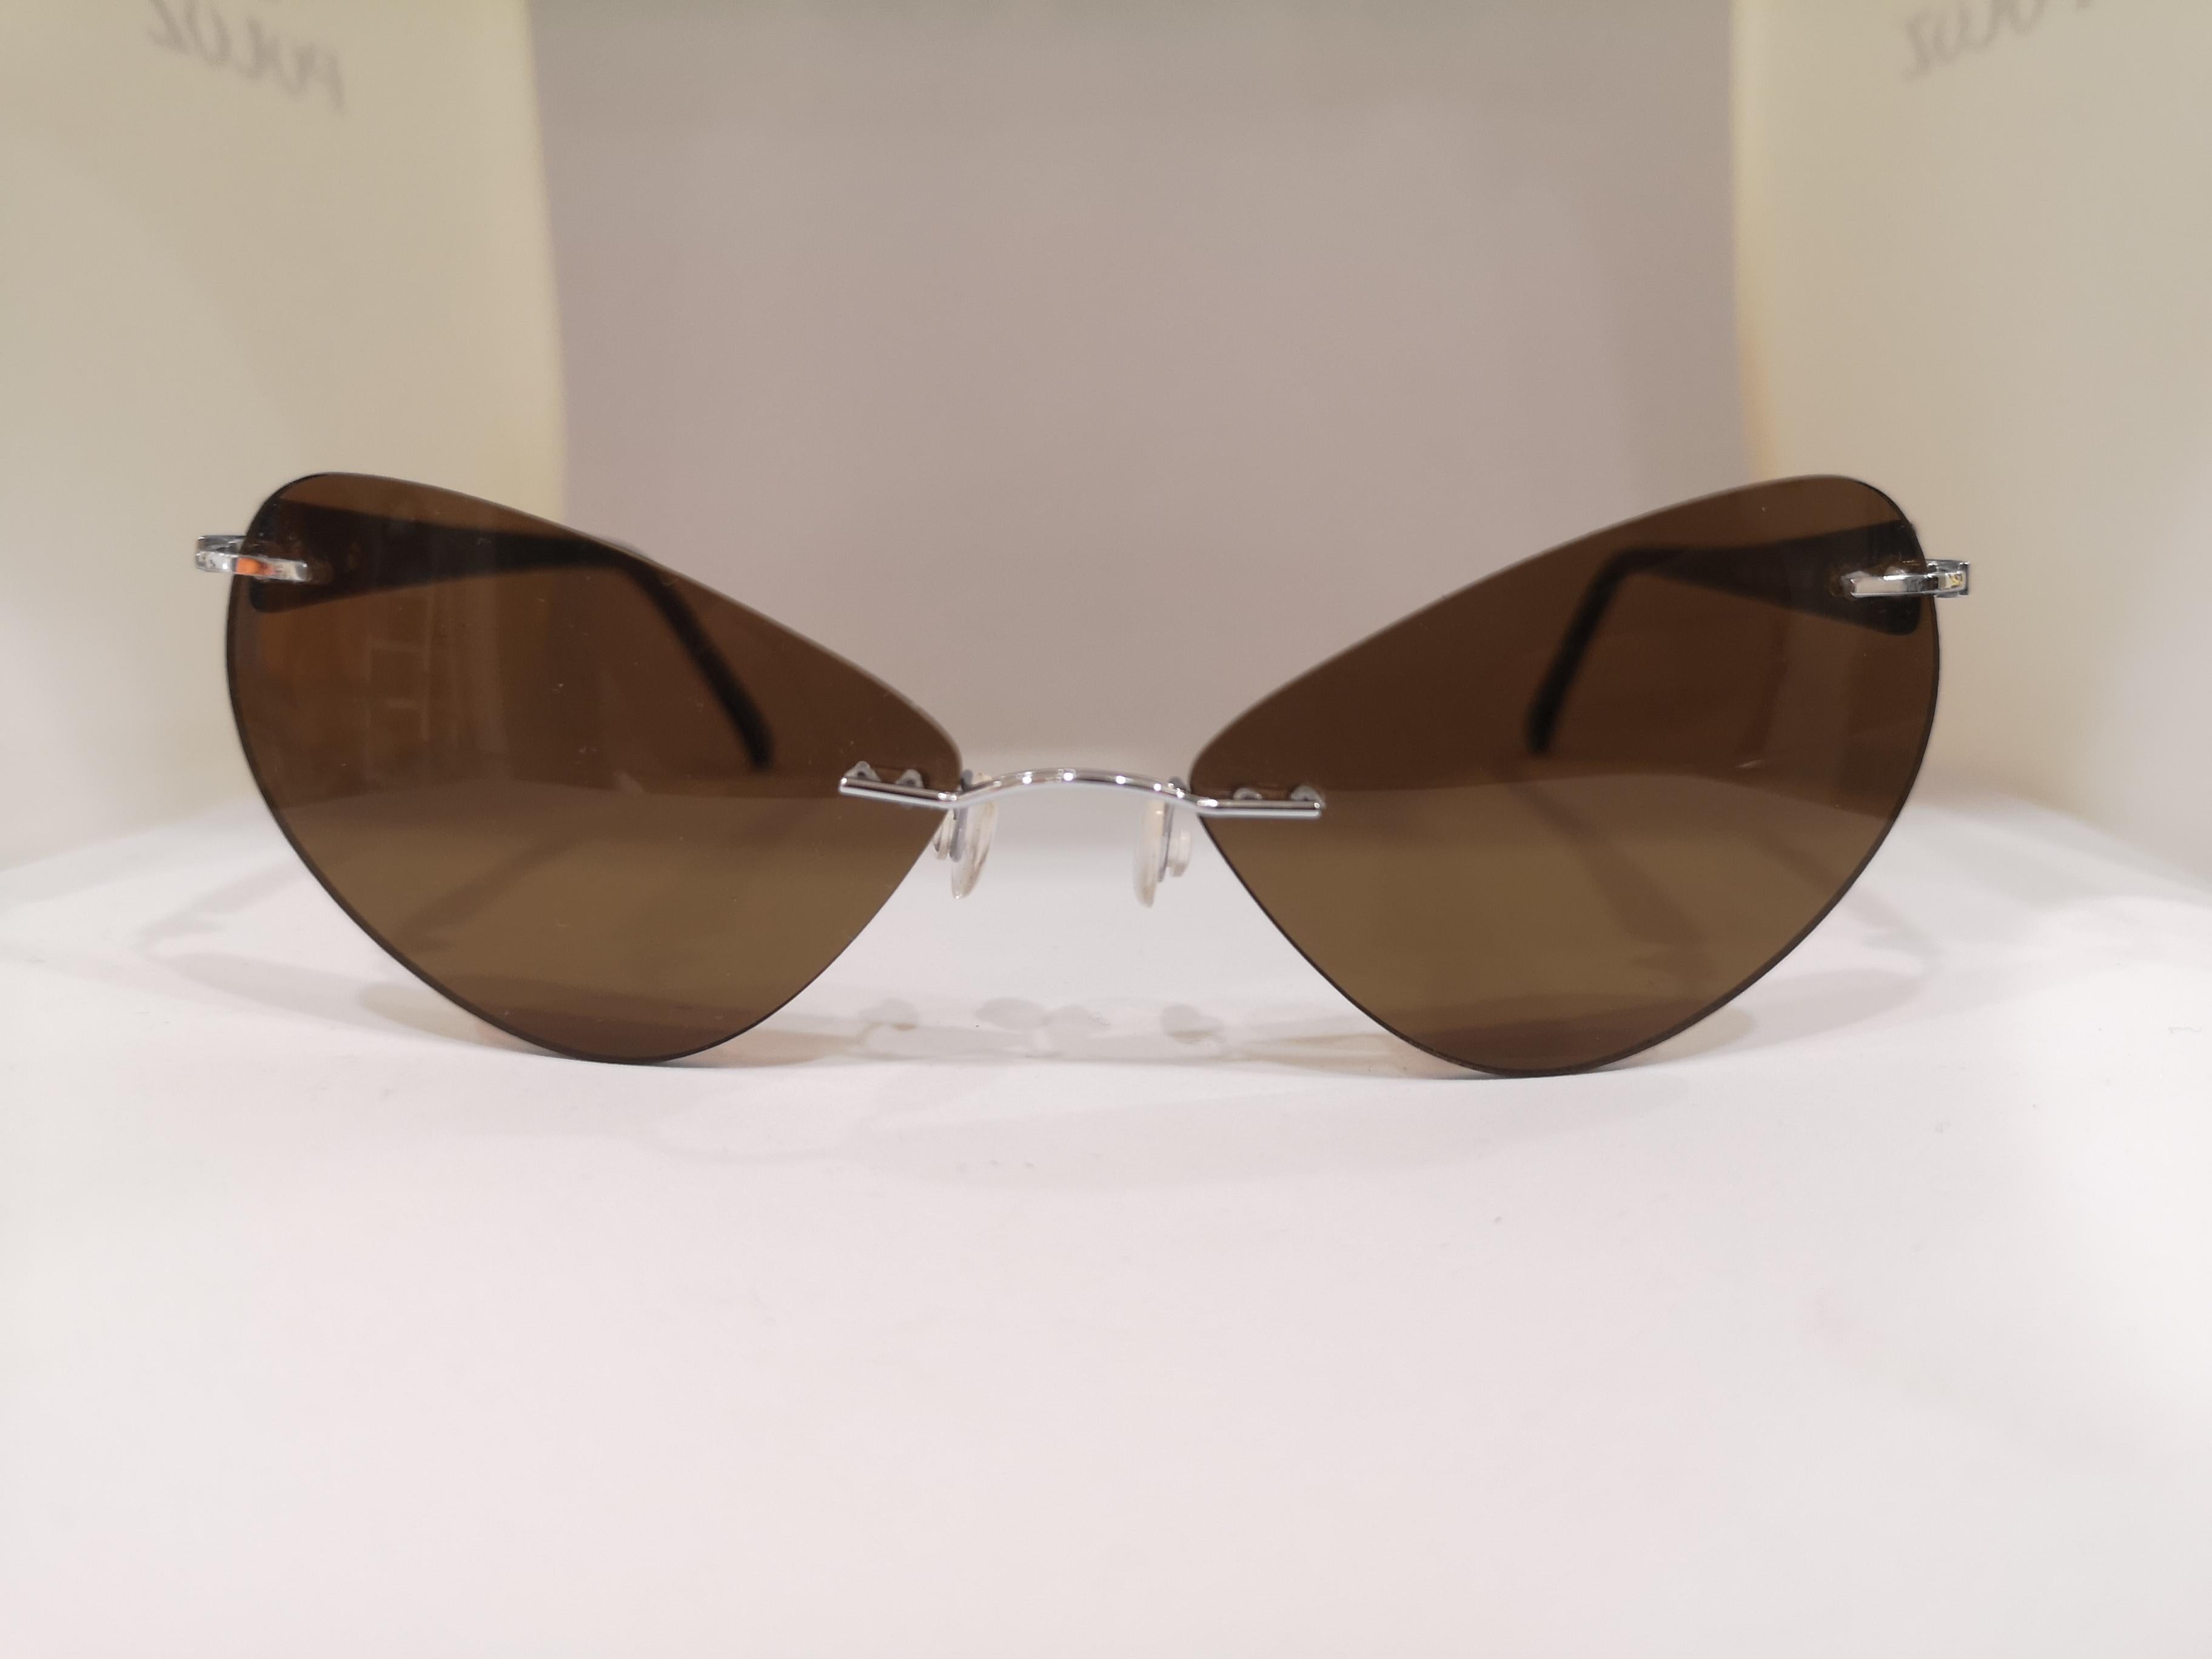 Kommafa brown lens sunglasses
totally handmade in italy 
unique piece